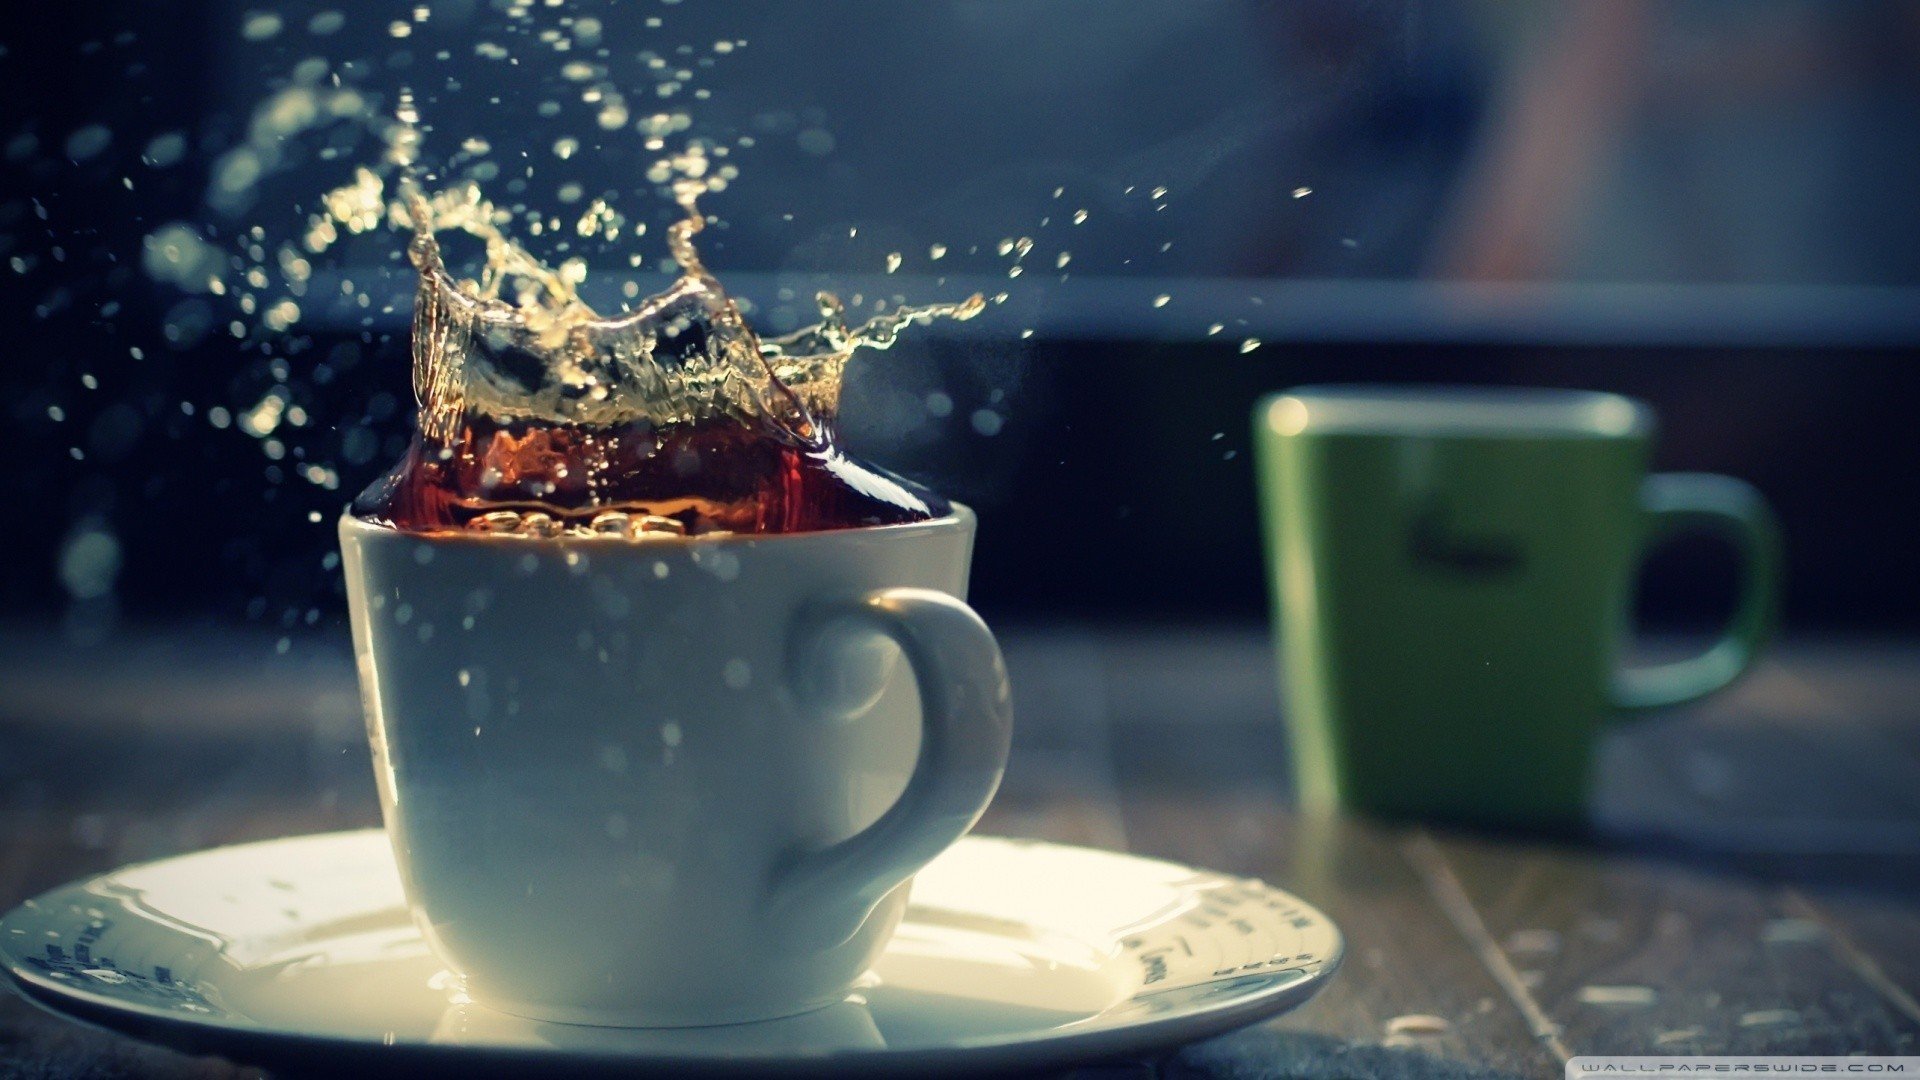 A splash of tea in a cup